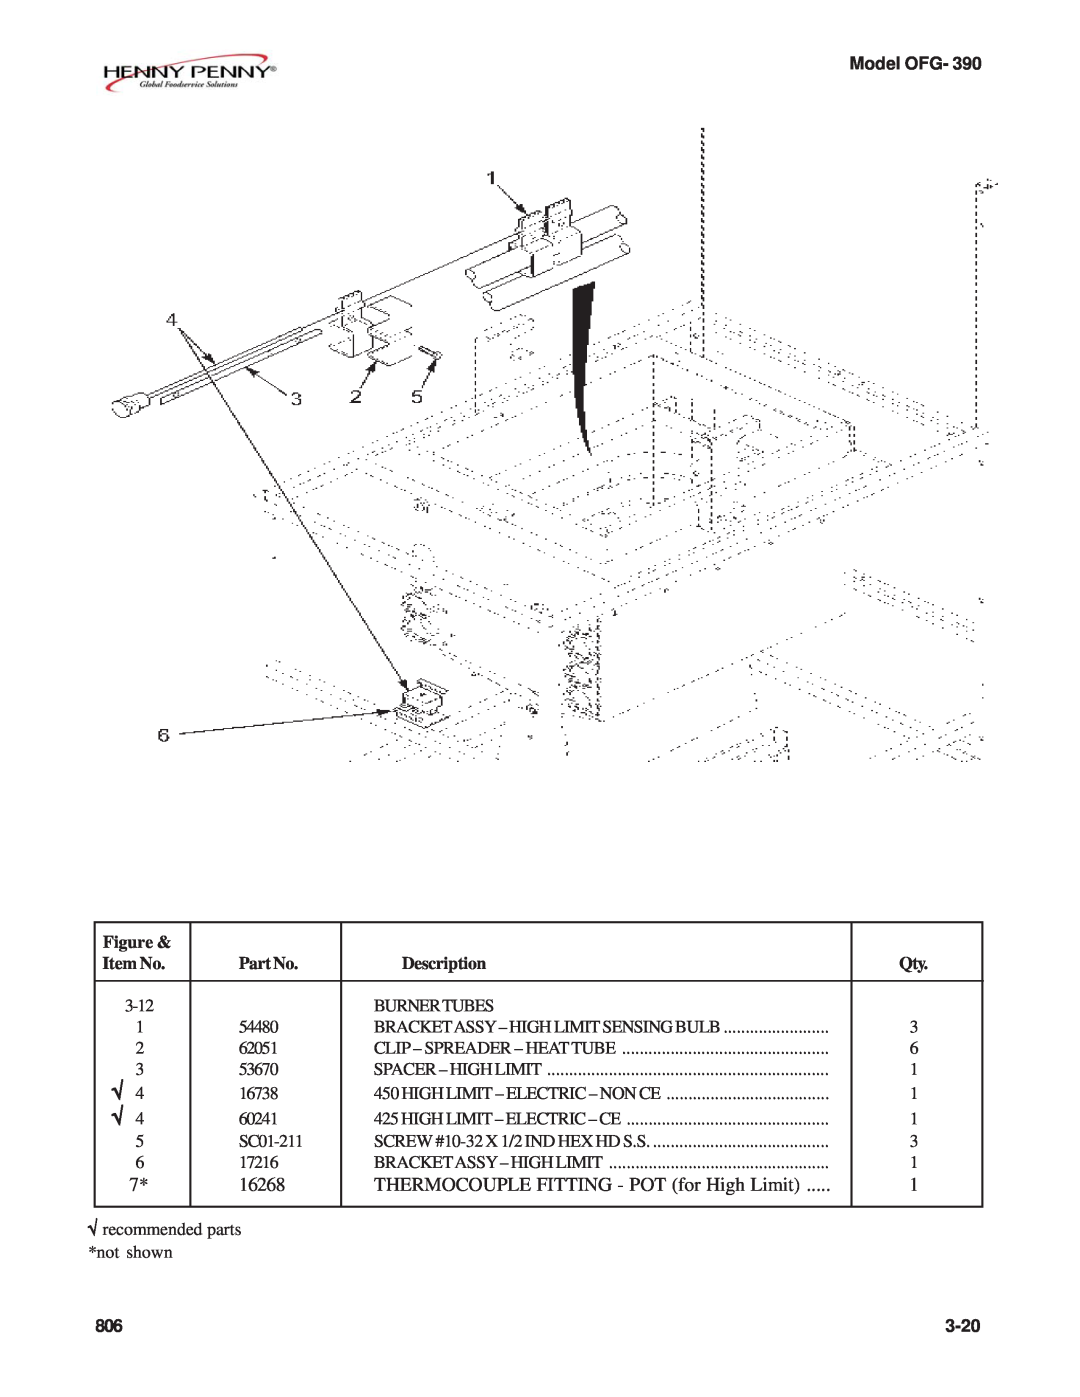 Henny Penny OFG-392 technical manual Model OFG, Figure, Item No, Part No, Description, 3-20 